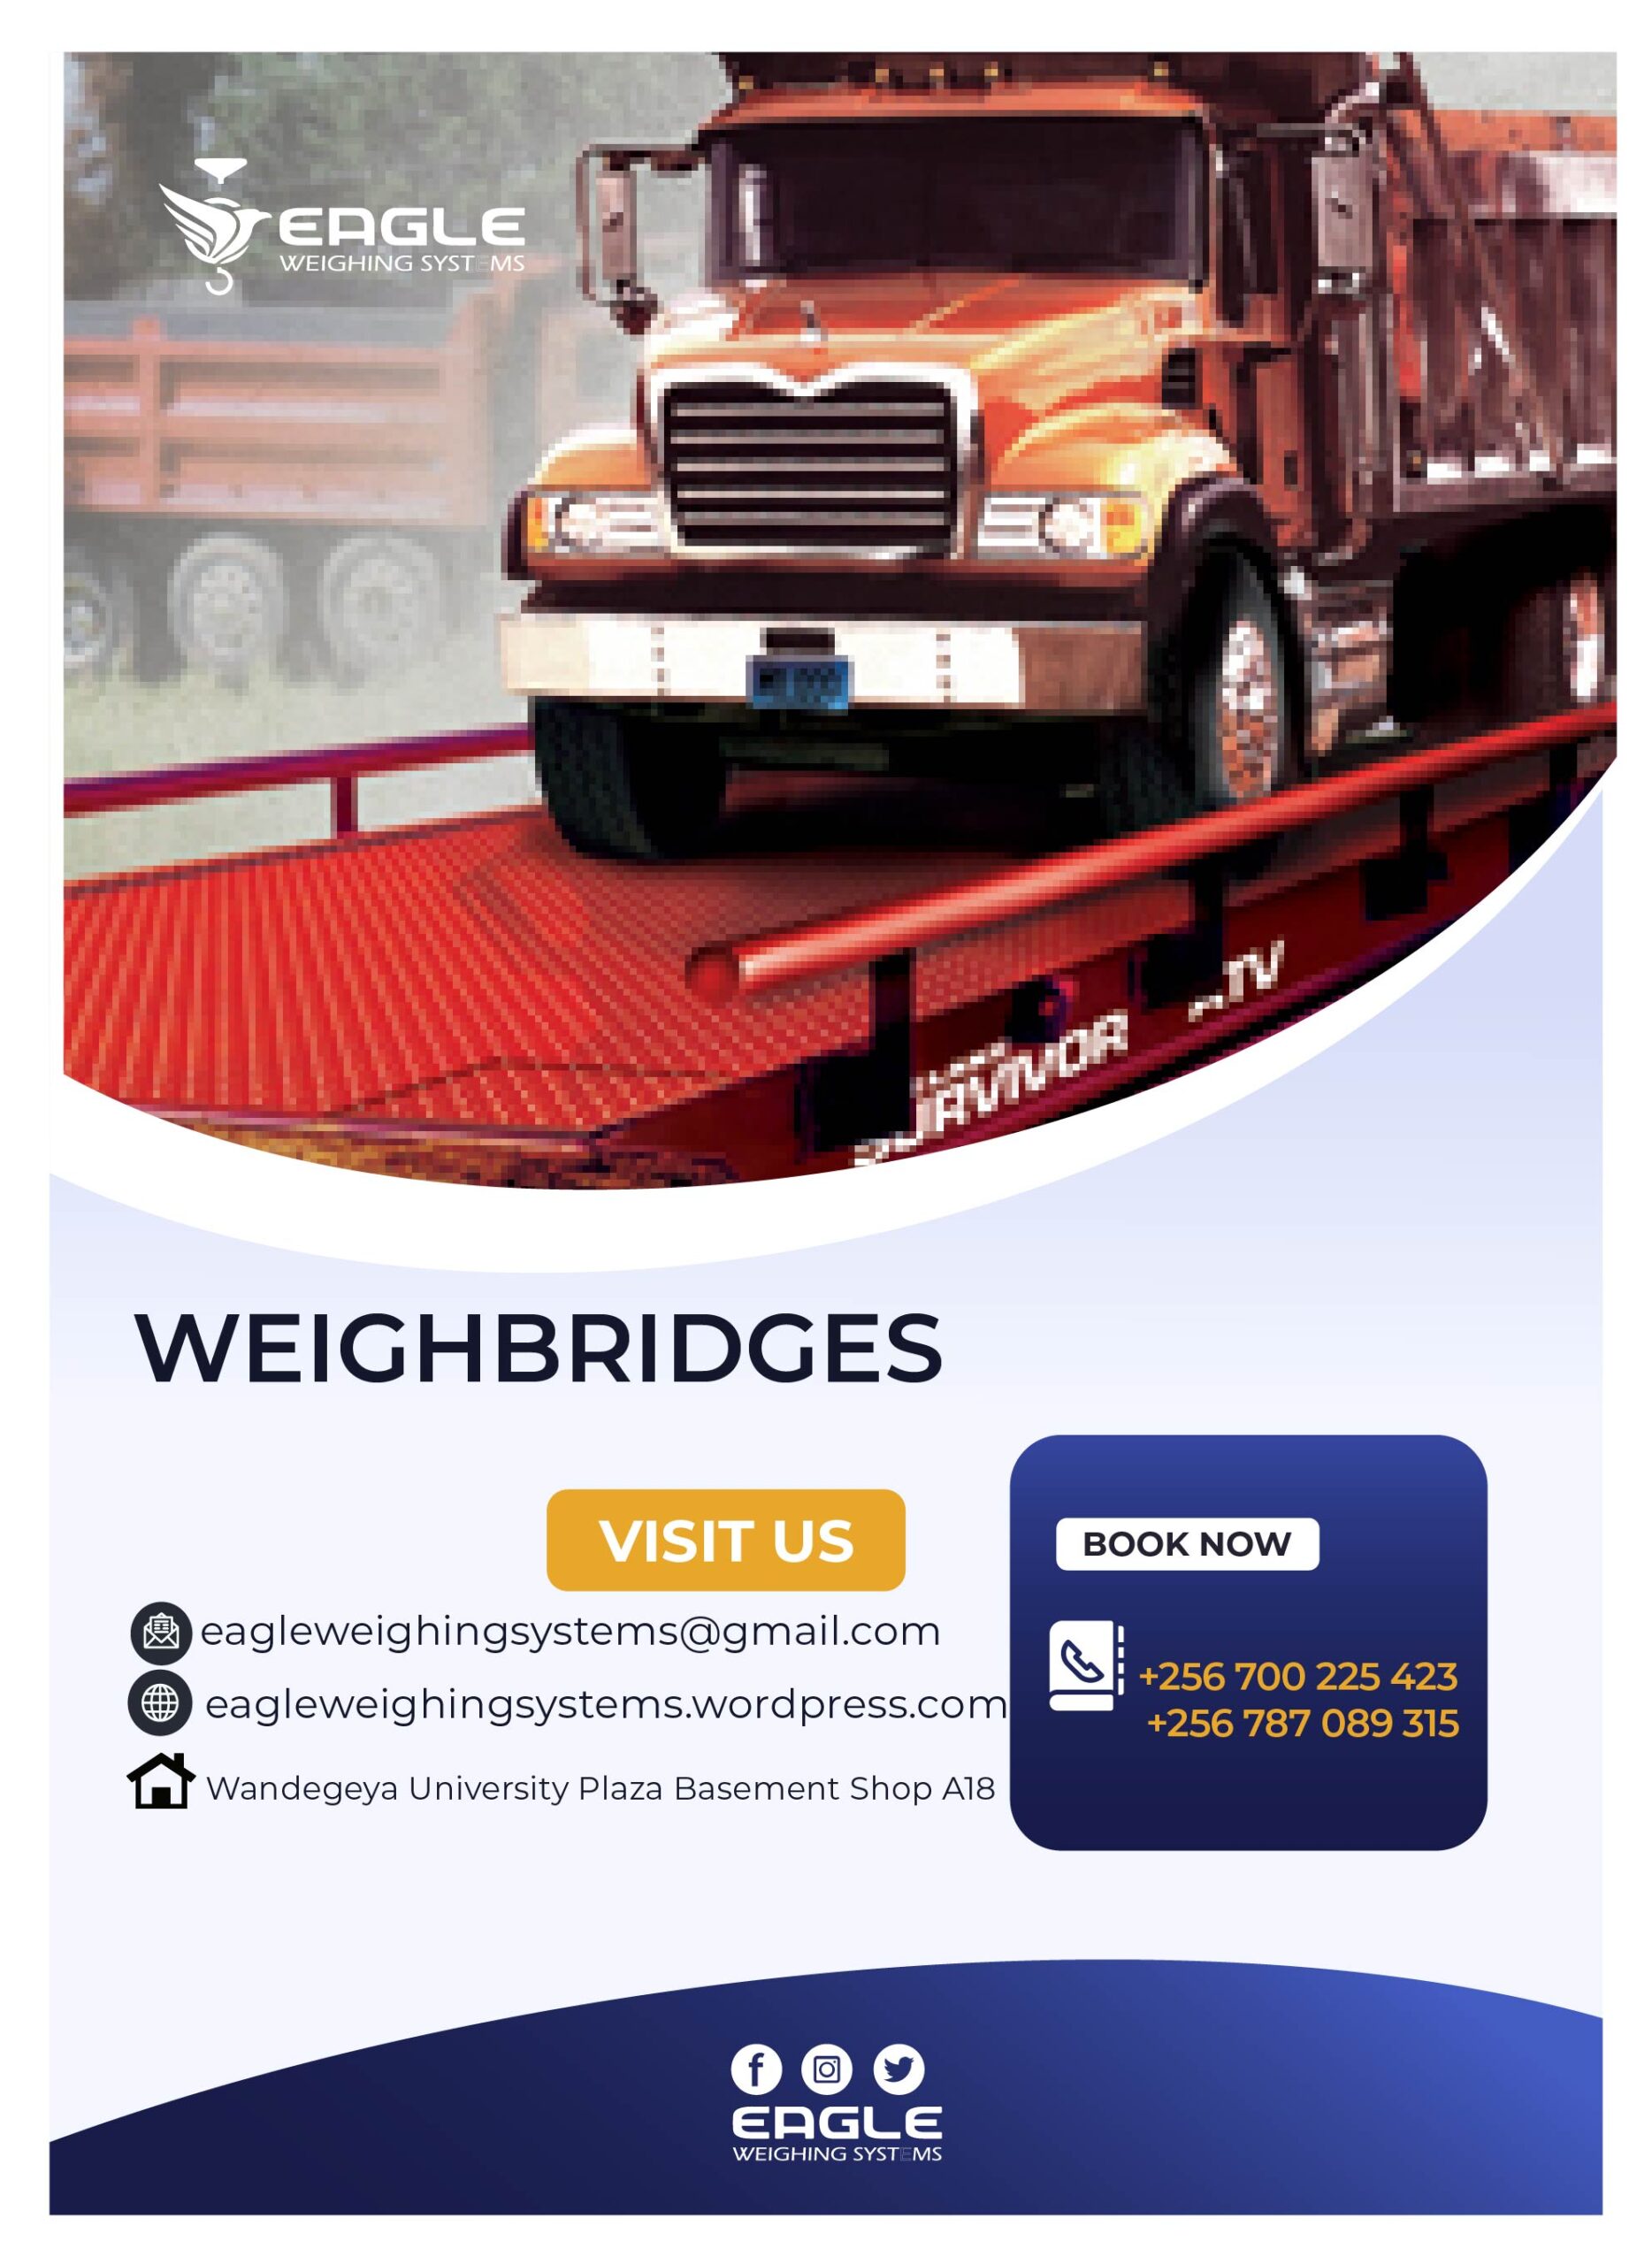 Mobile Weighbridge For Sale In Uganda